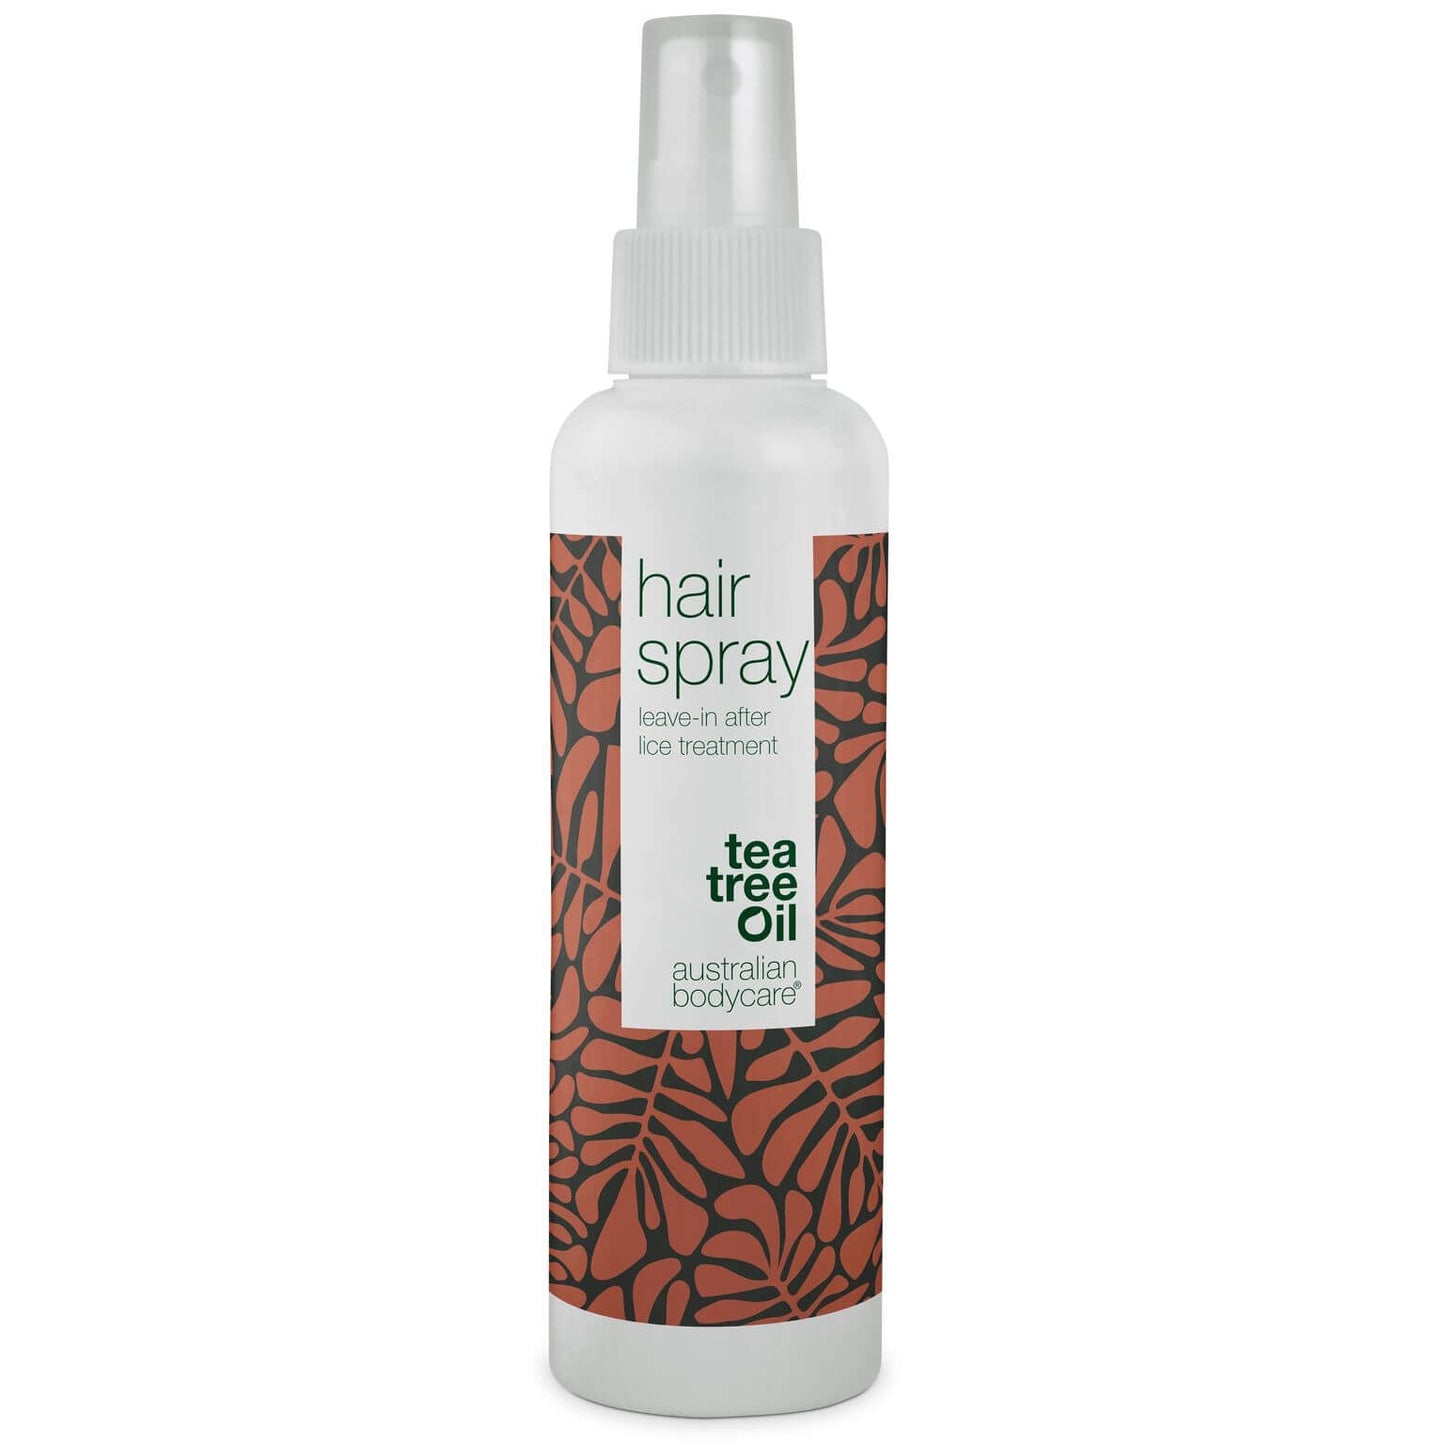 Anti head lice hair spray for hair and scalp - Hair spray to prevent head lice after treatment